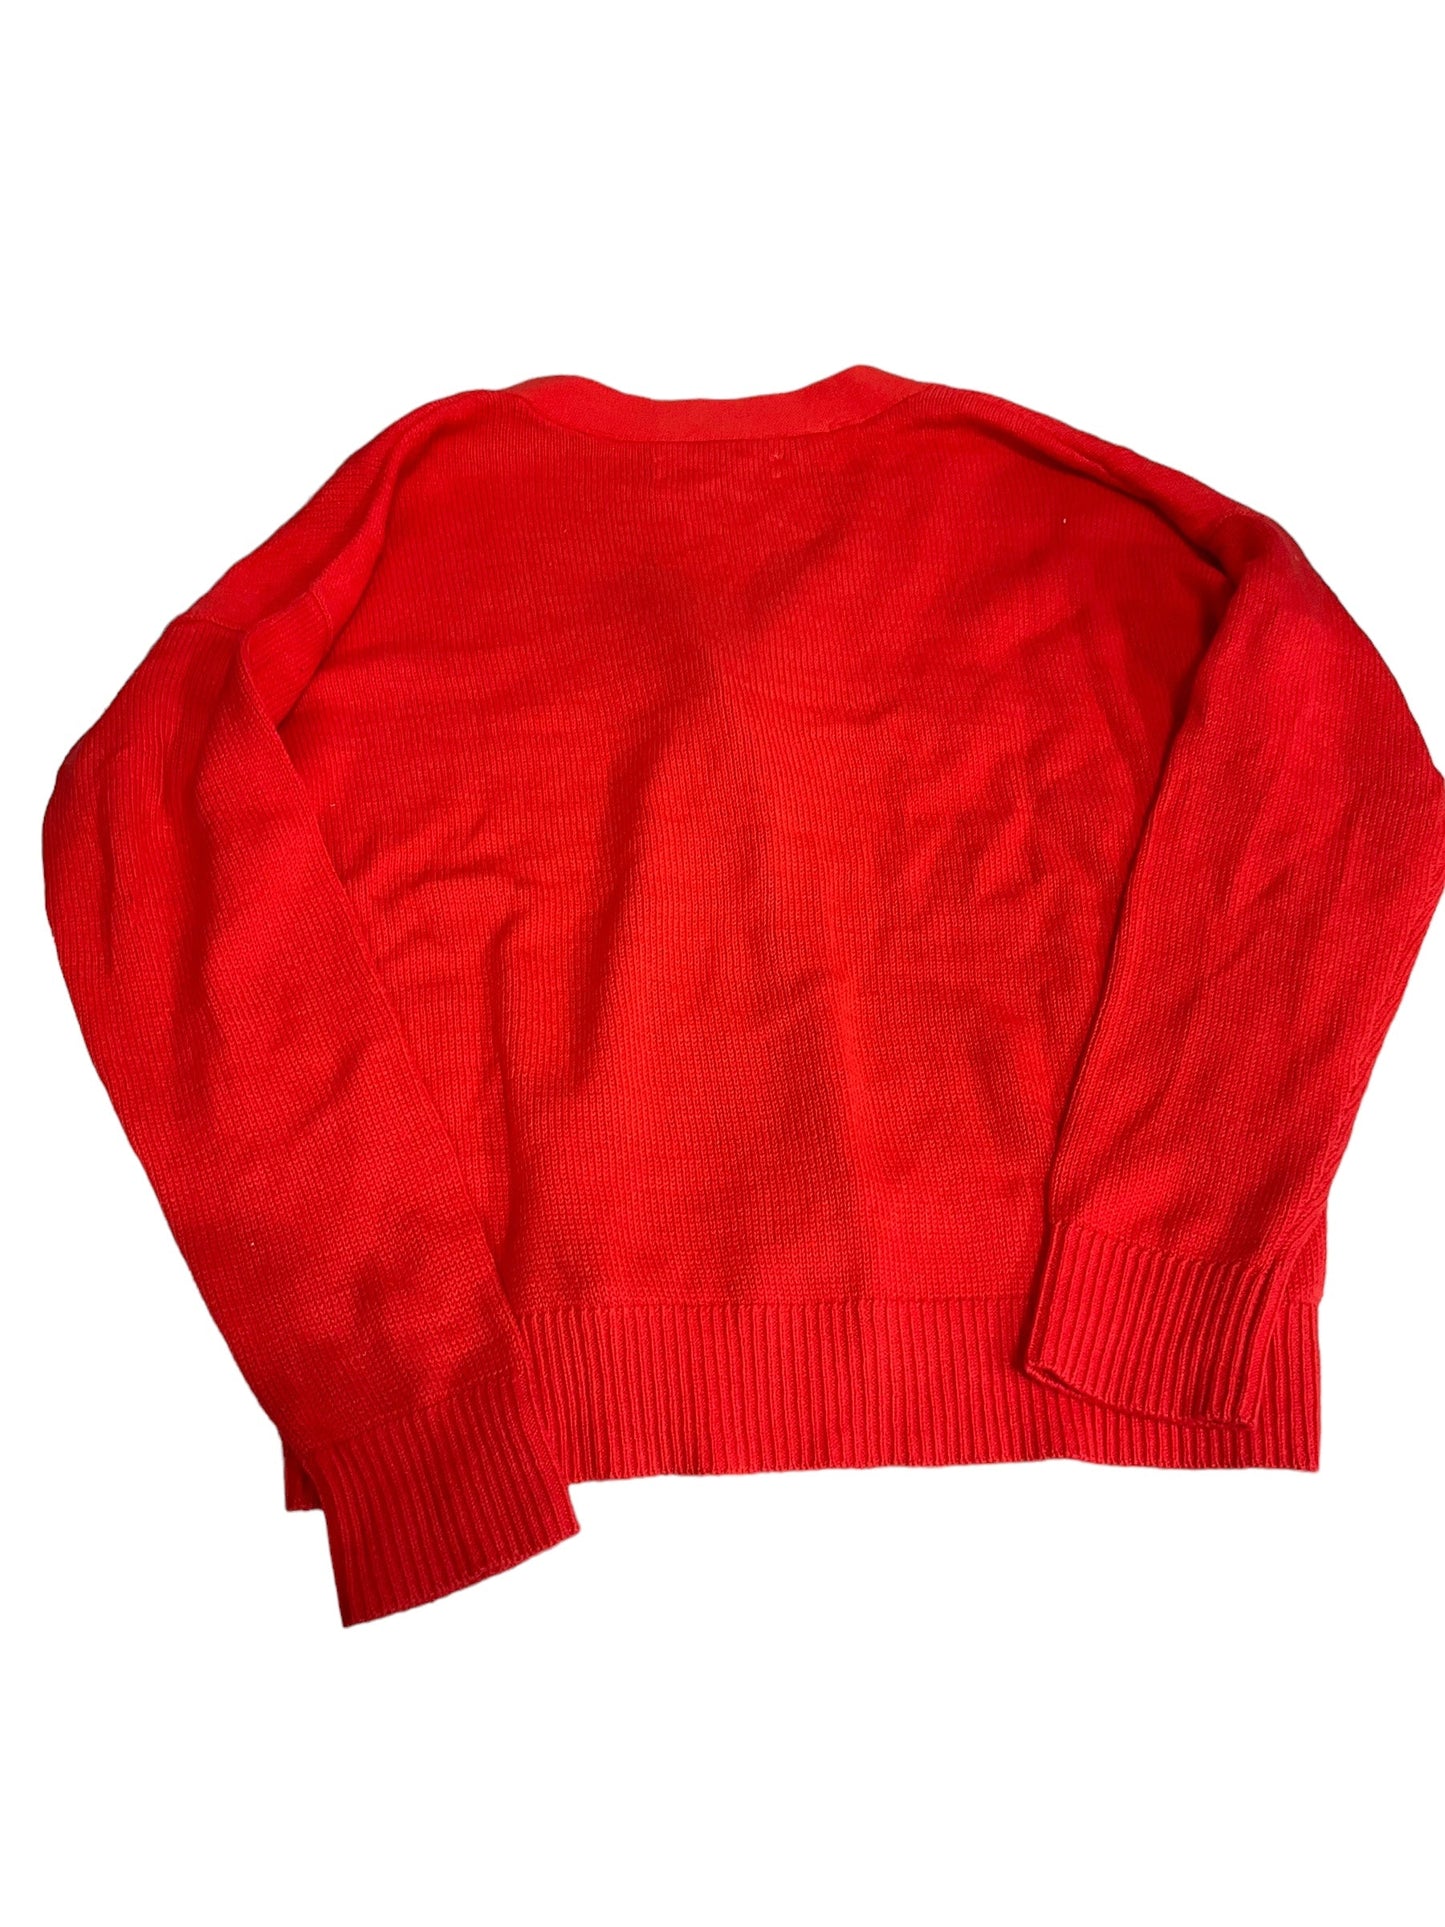 Red Sweater Cardigan Loft, Size M